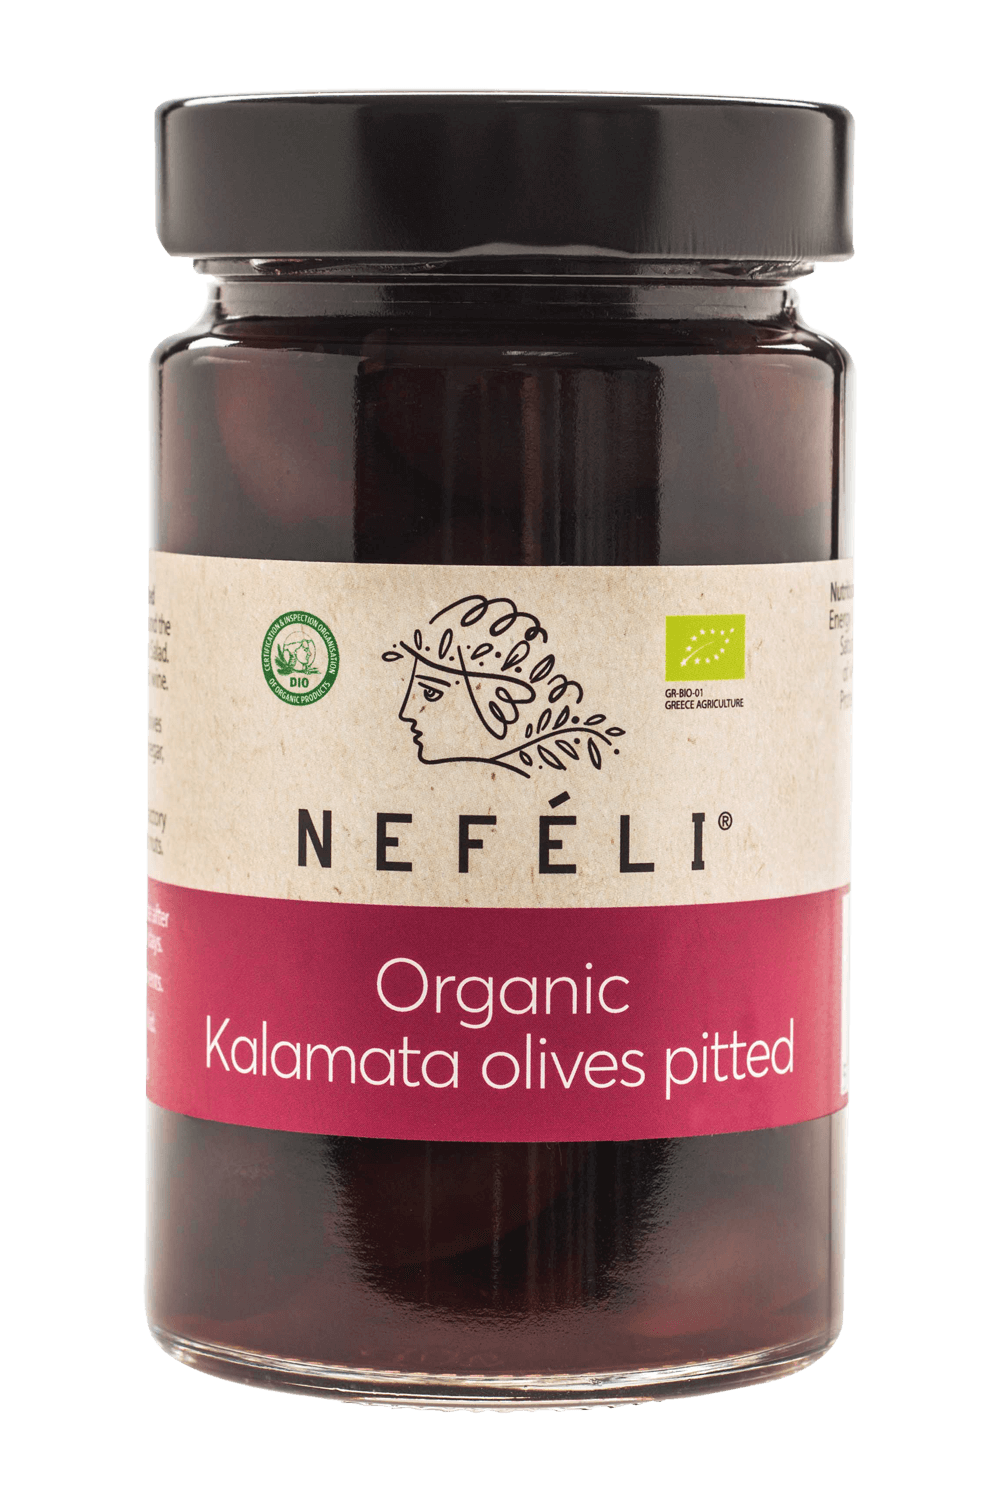 Organic Kalamata olives pitted